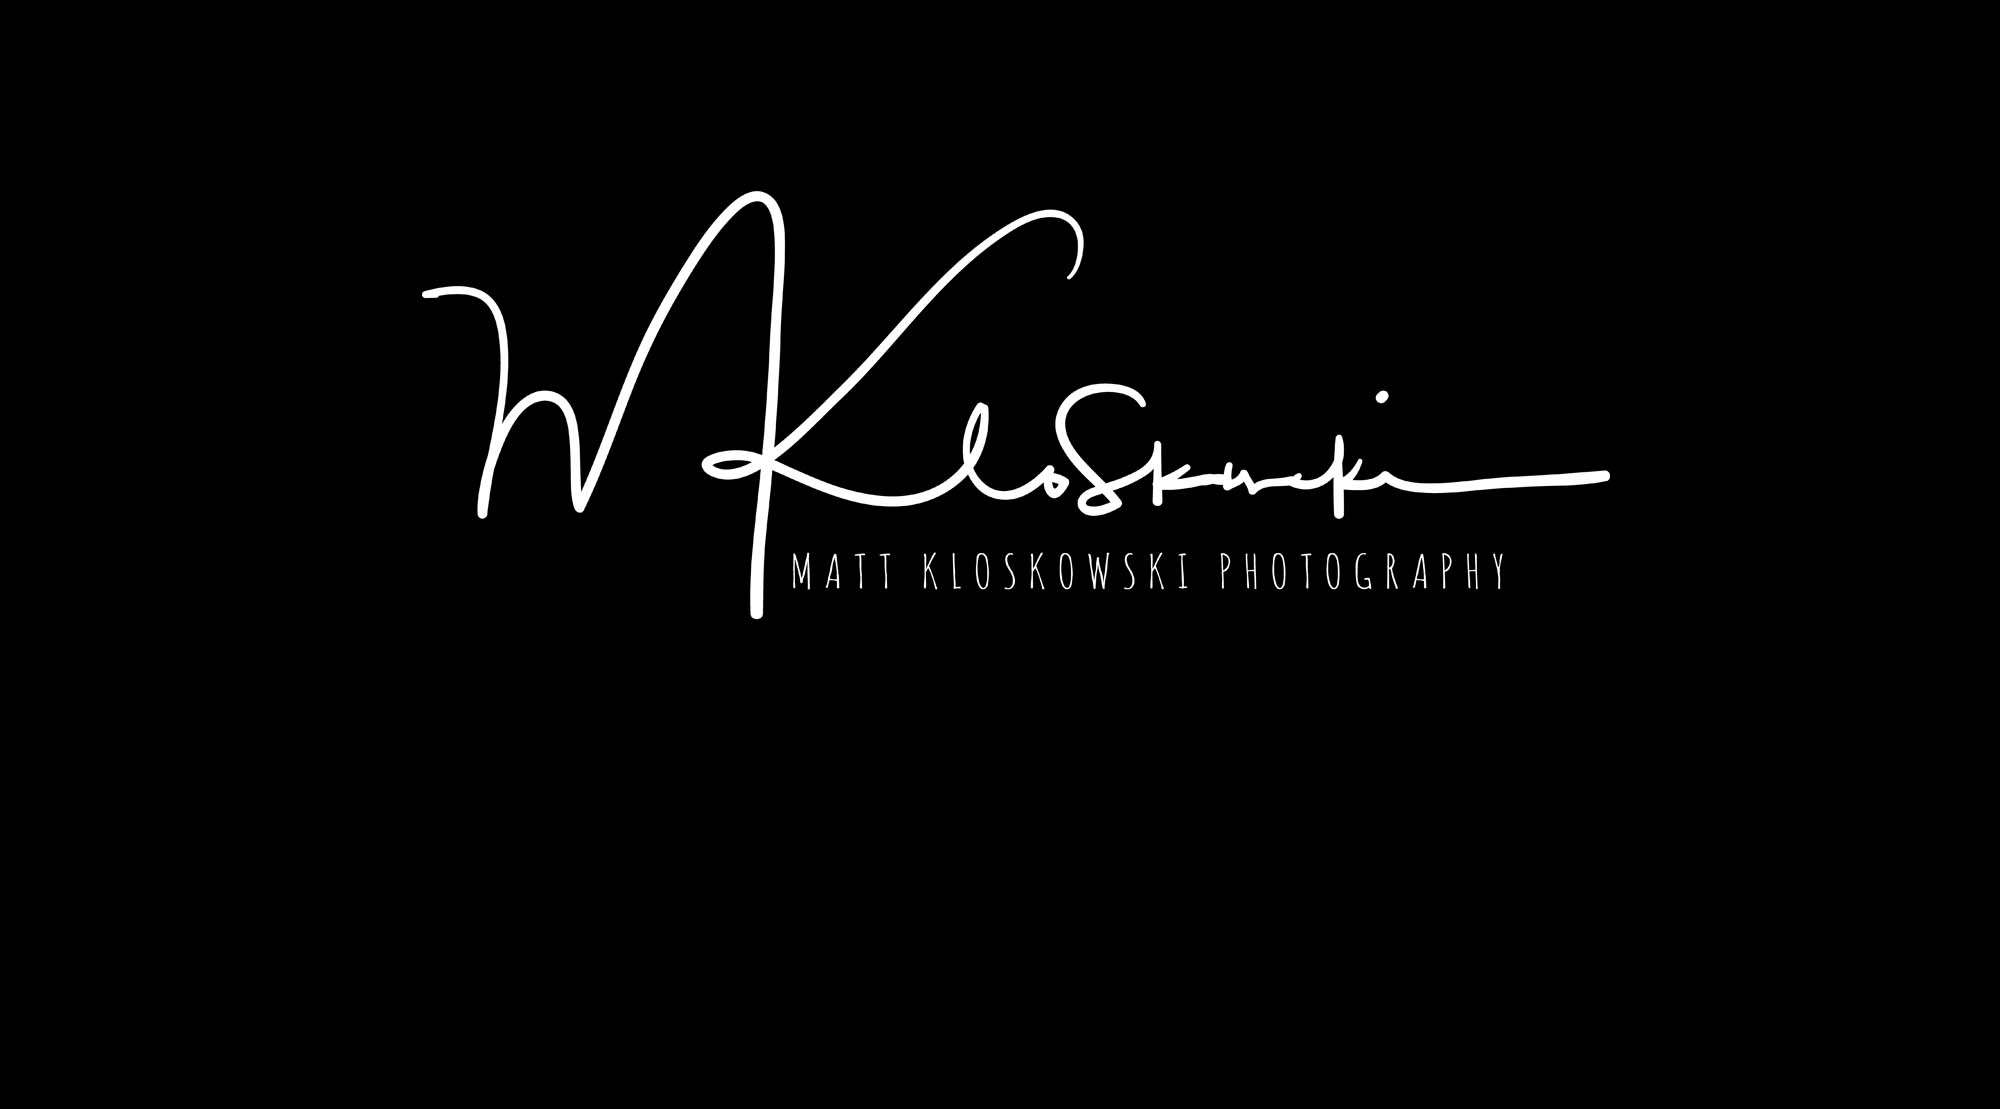 Photography Signature Logo - A New Way to Add Your Signature to a Photo - Matt Kloskowski